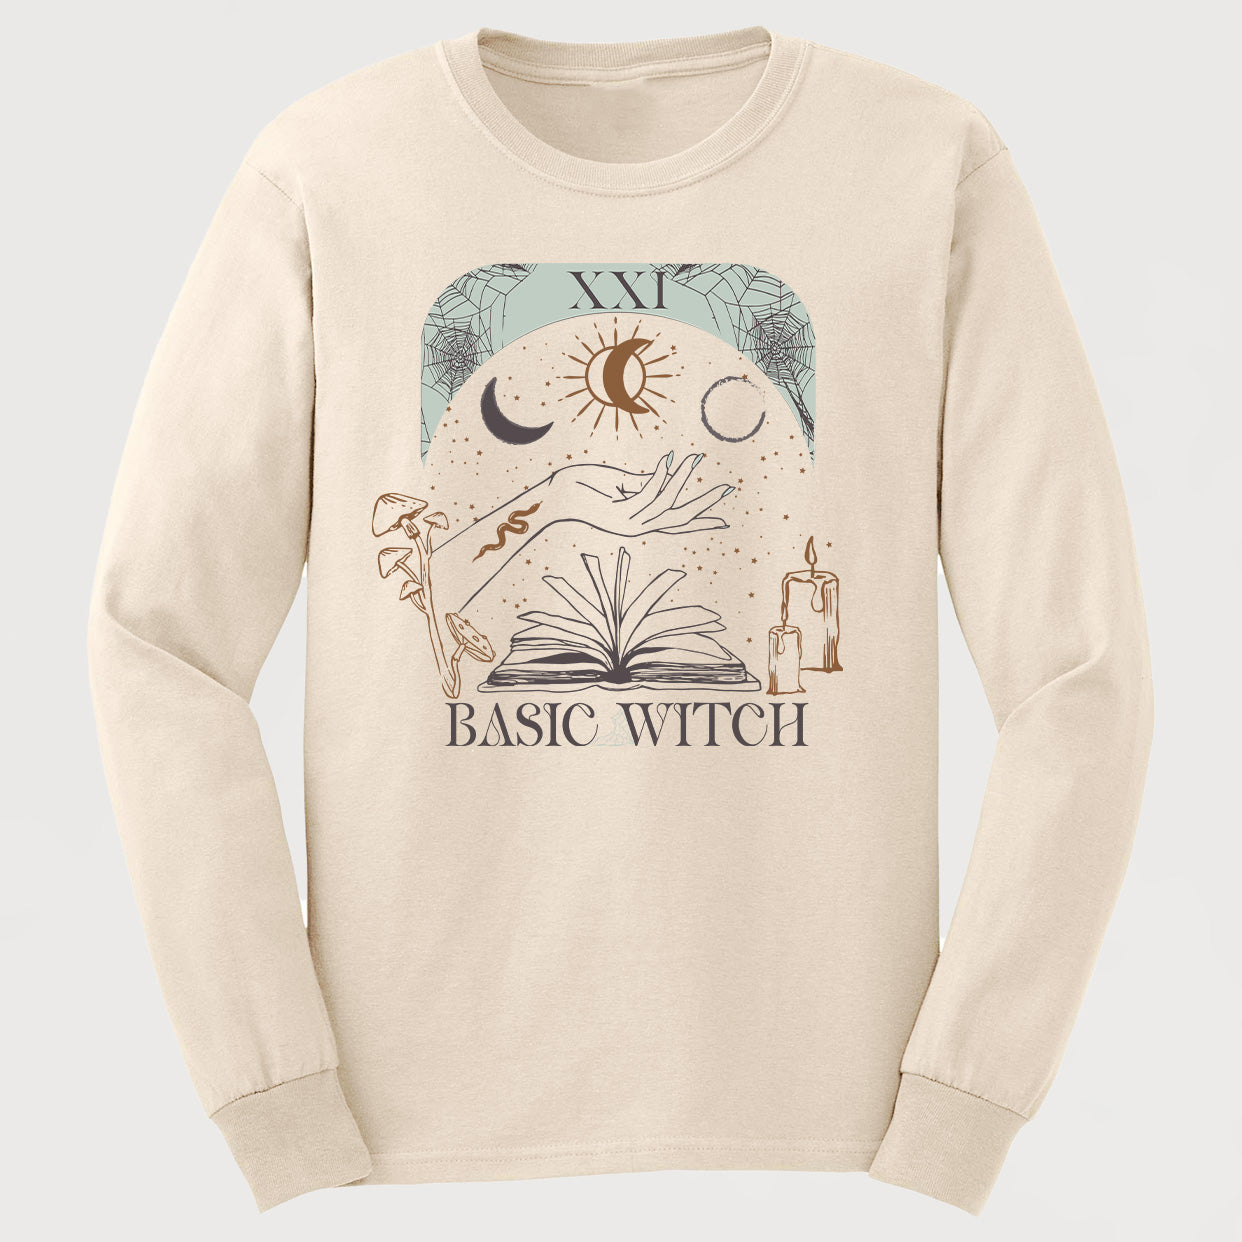 Basic witch sweatshirt